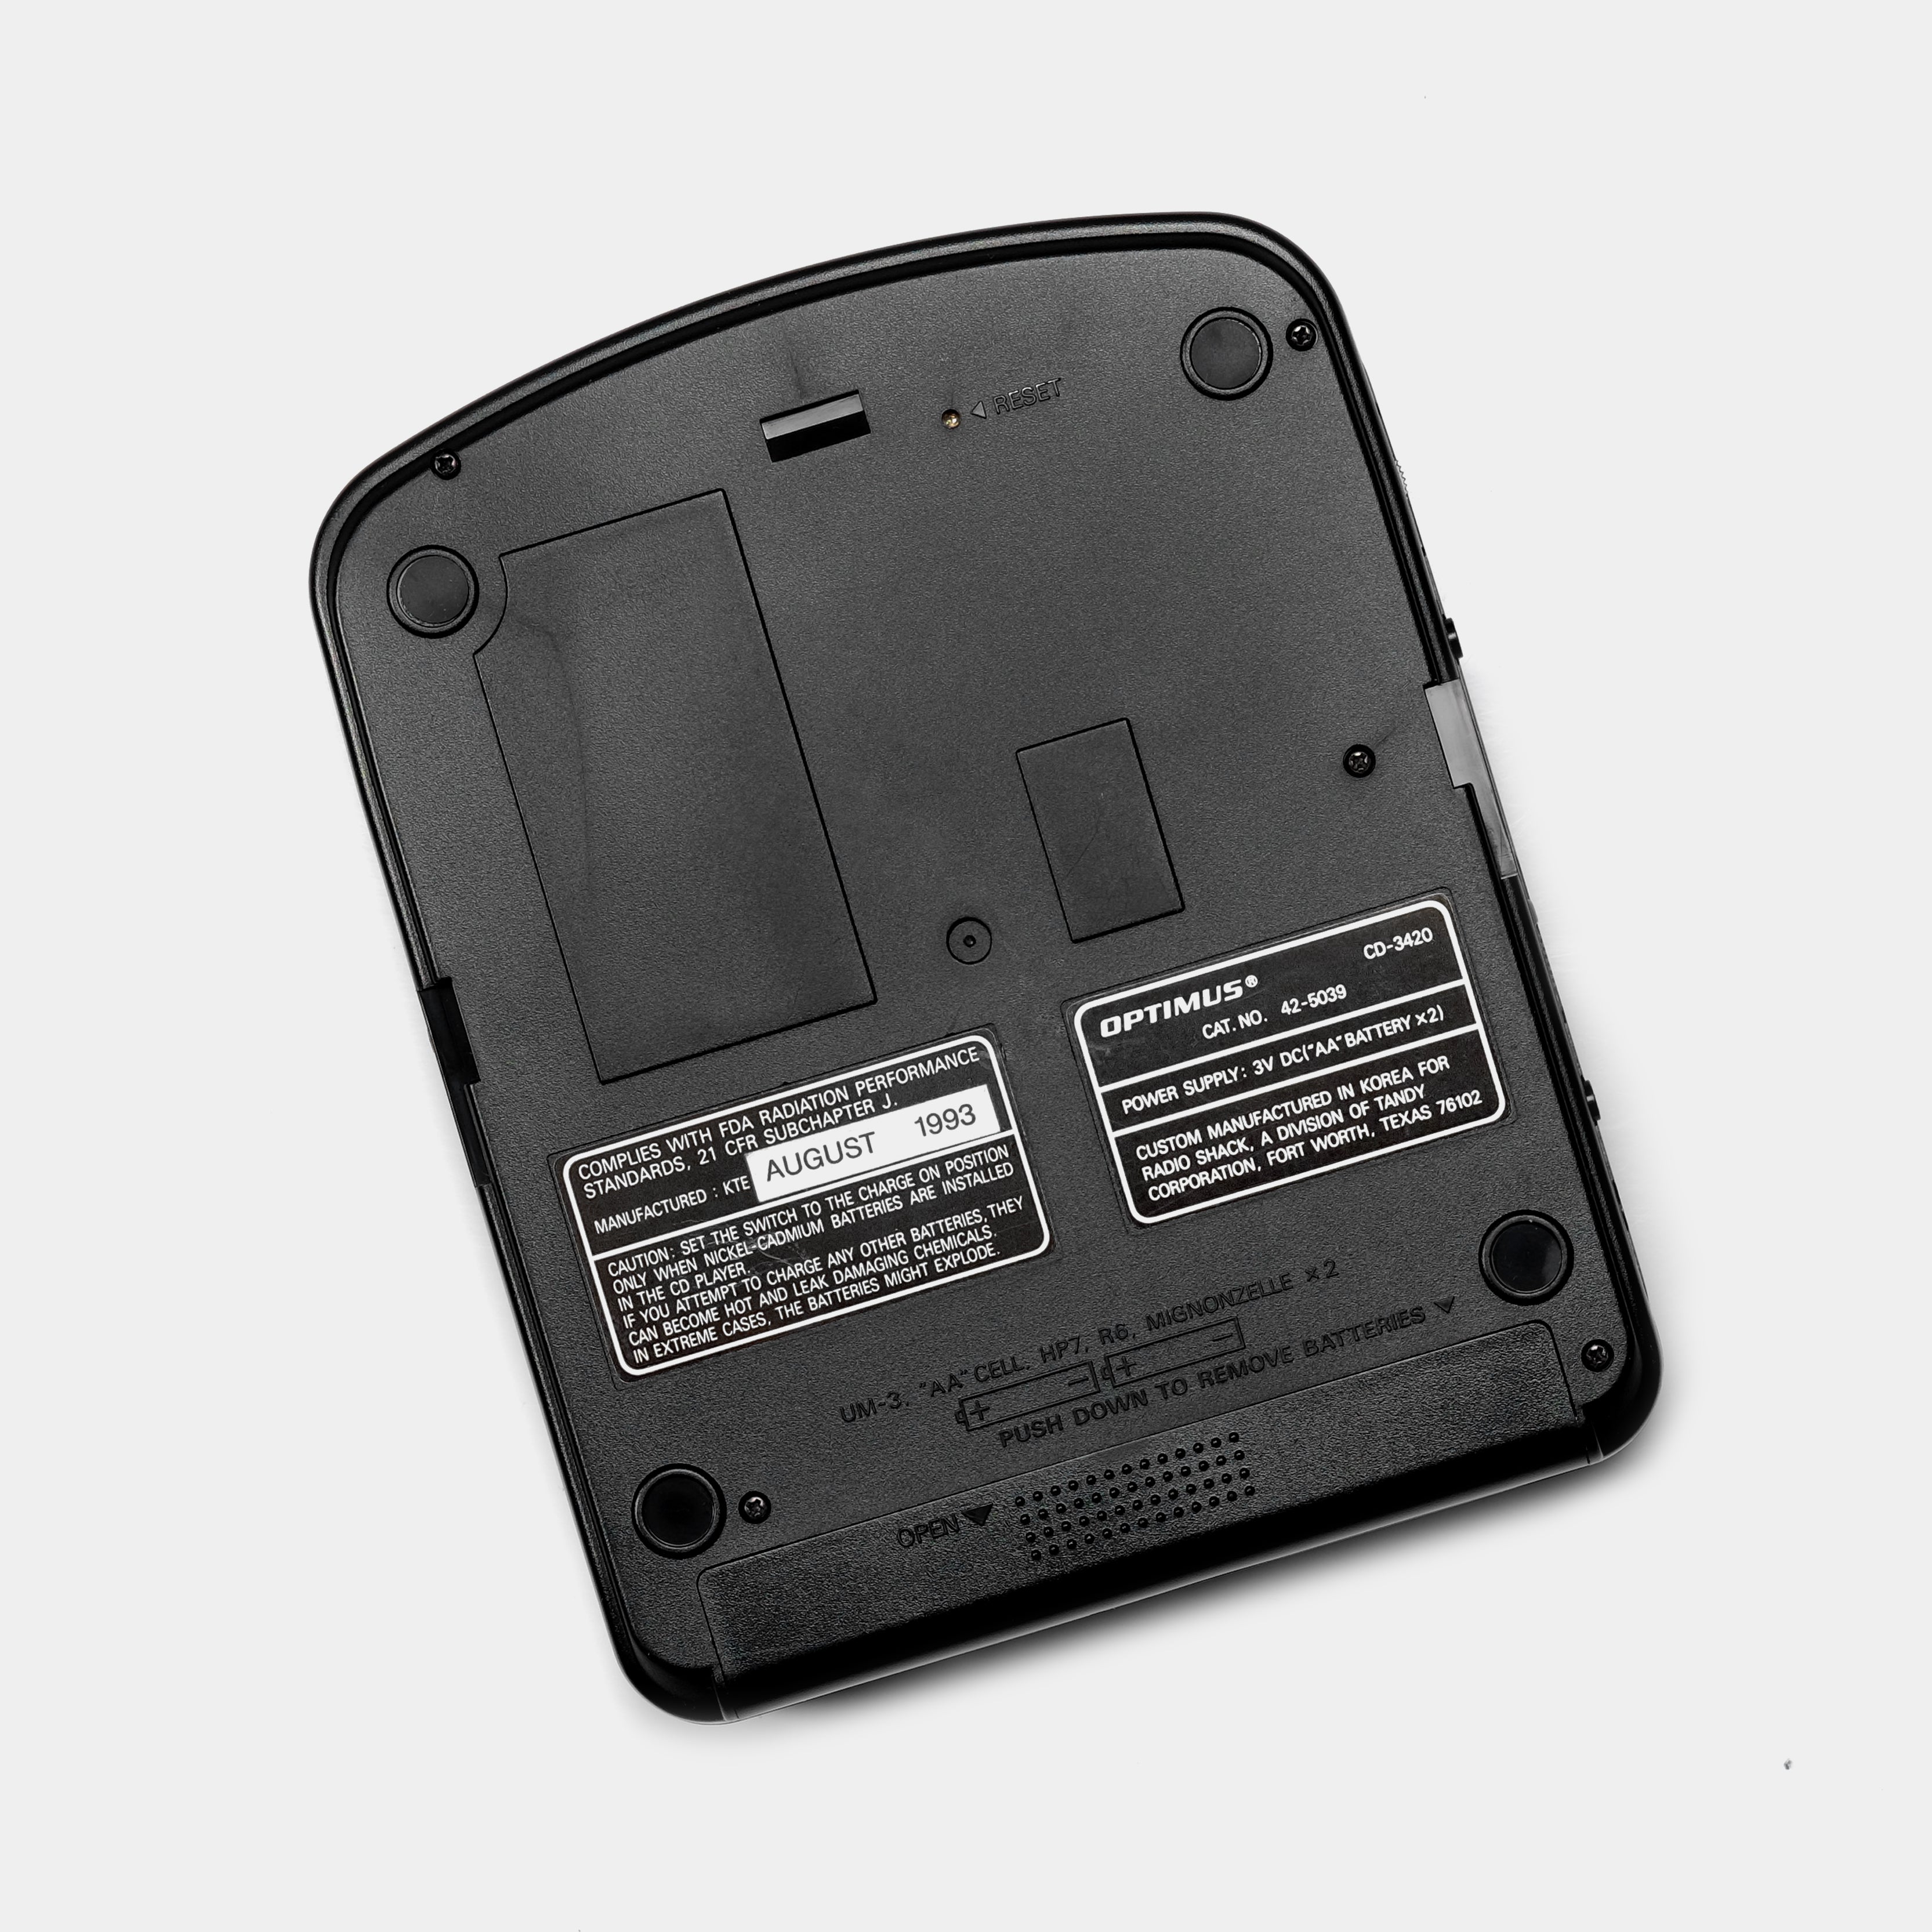 Optimus CD-3420 Portable CD Player